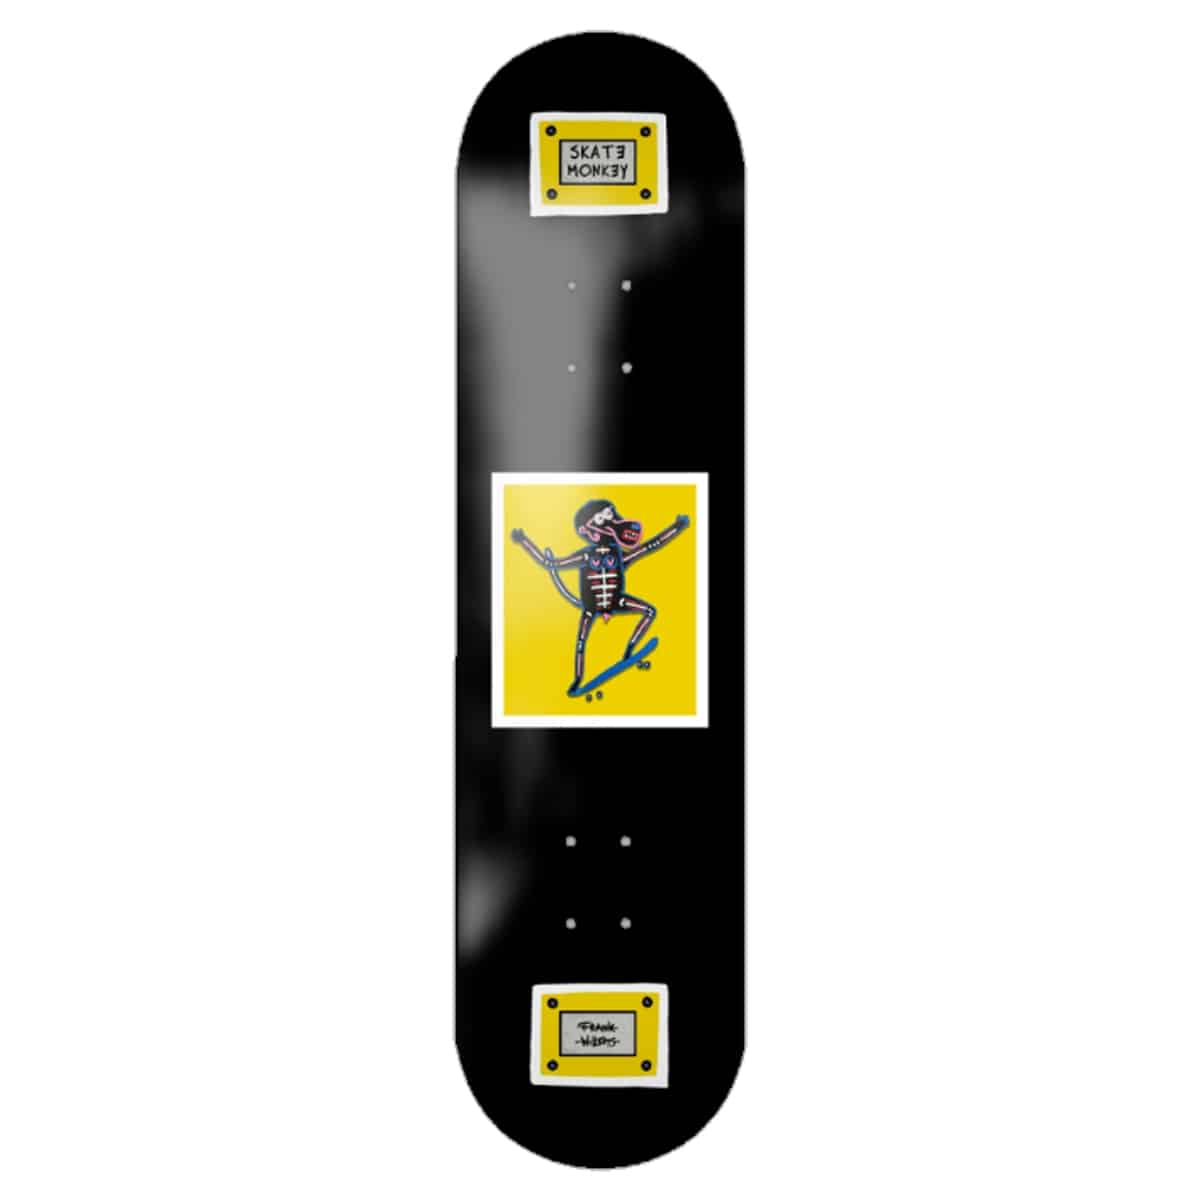 Skateboard Pro Deck - SKATE MONKEY #1 - Black